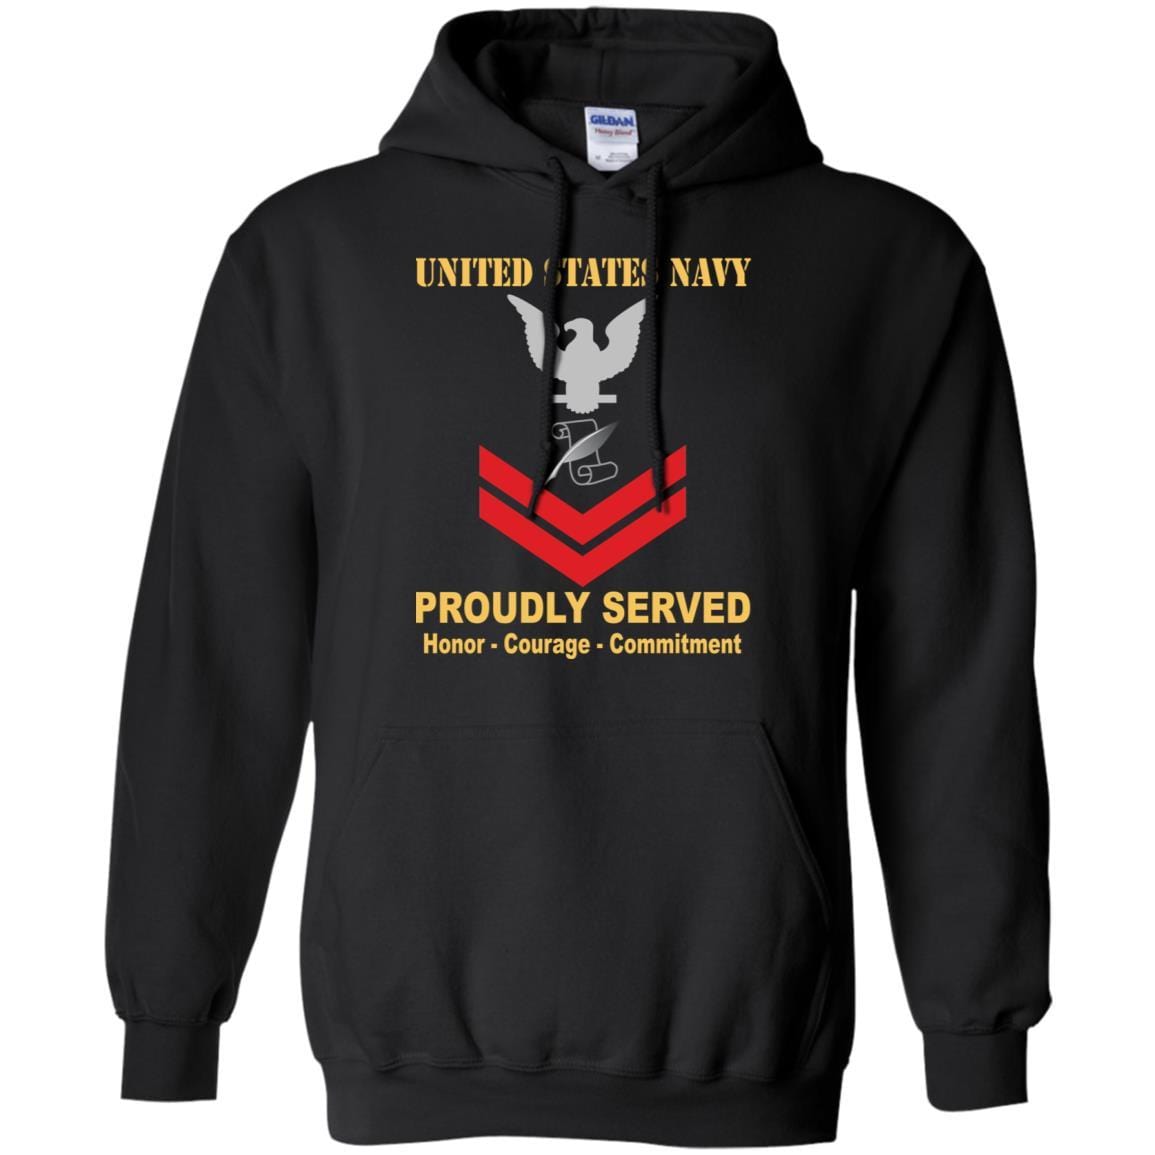 Navy Journalist Navy JO E-5 Rating Badges Proudly Served T-Shirt For Men On Front-TShirt-Navy-Veterans Nation